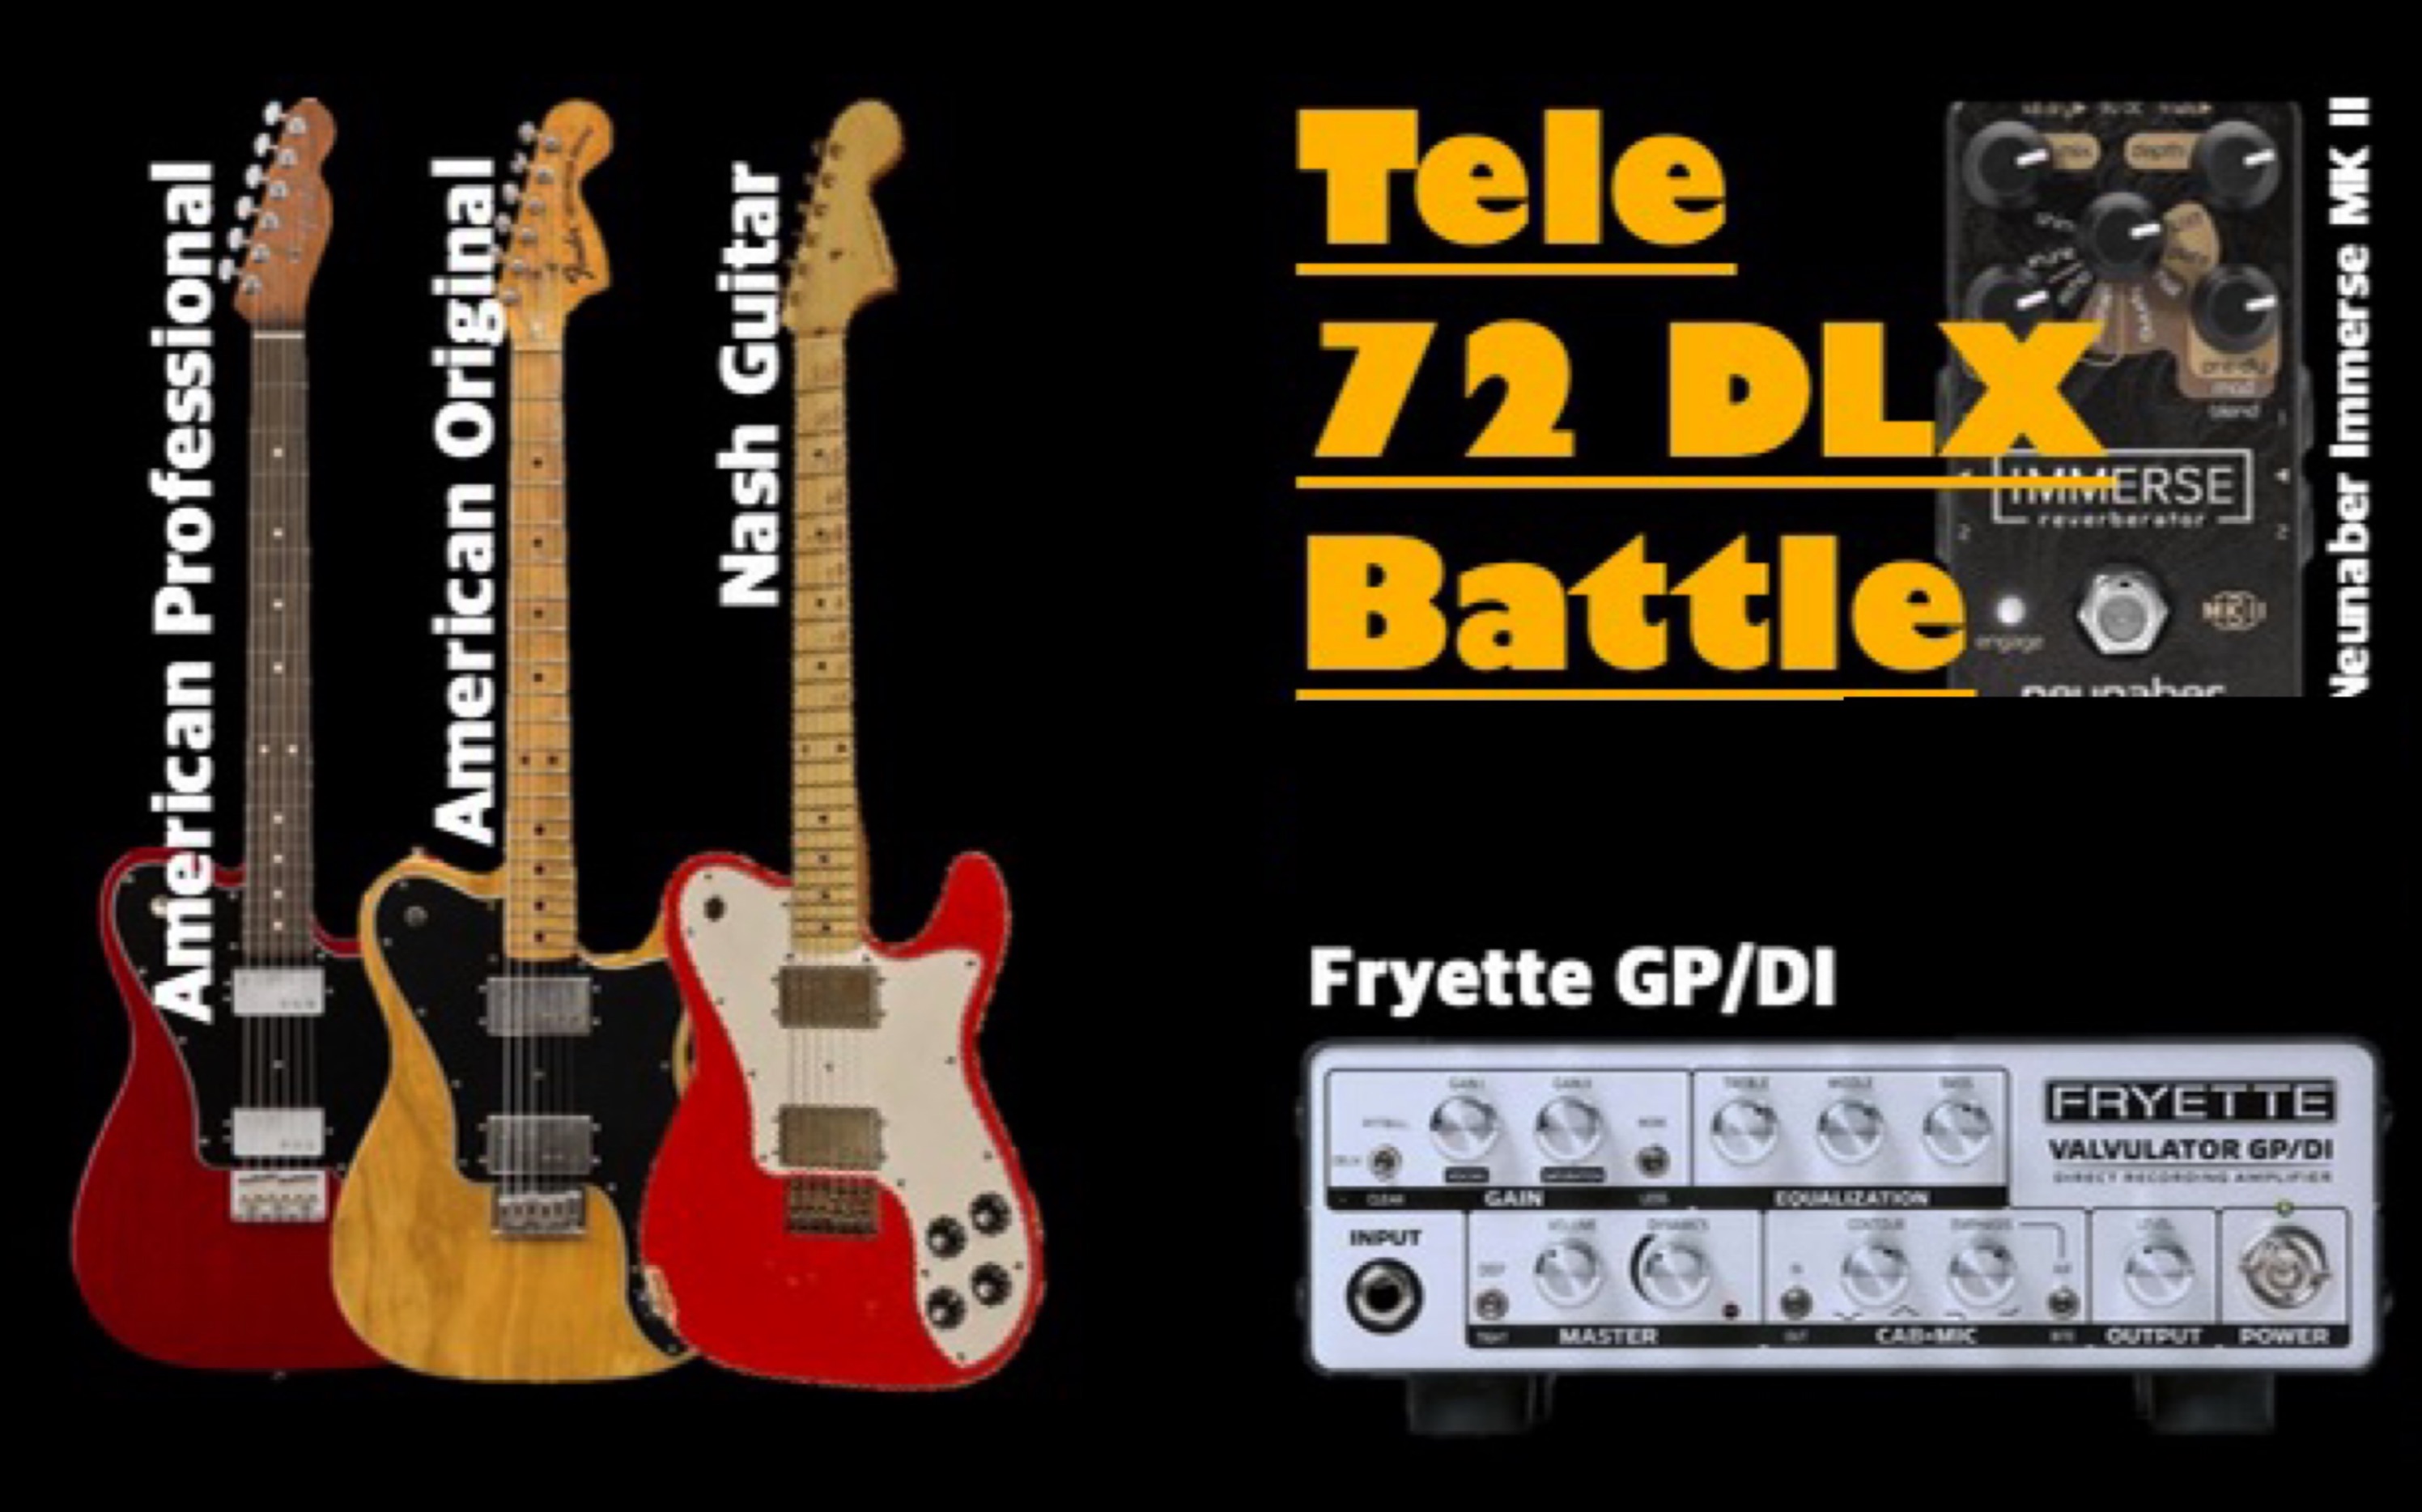 【吉他测评】我的三把Telecaster 72 Deluxe（清音篇）